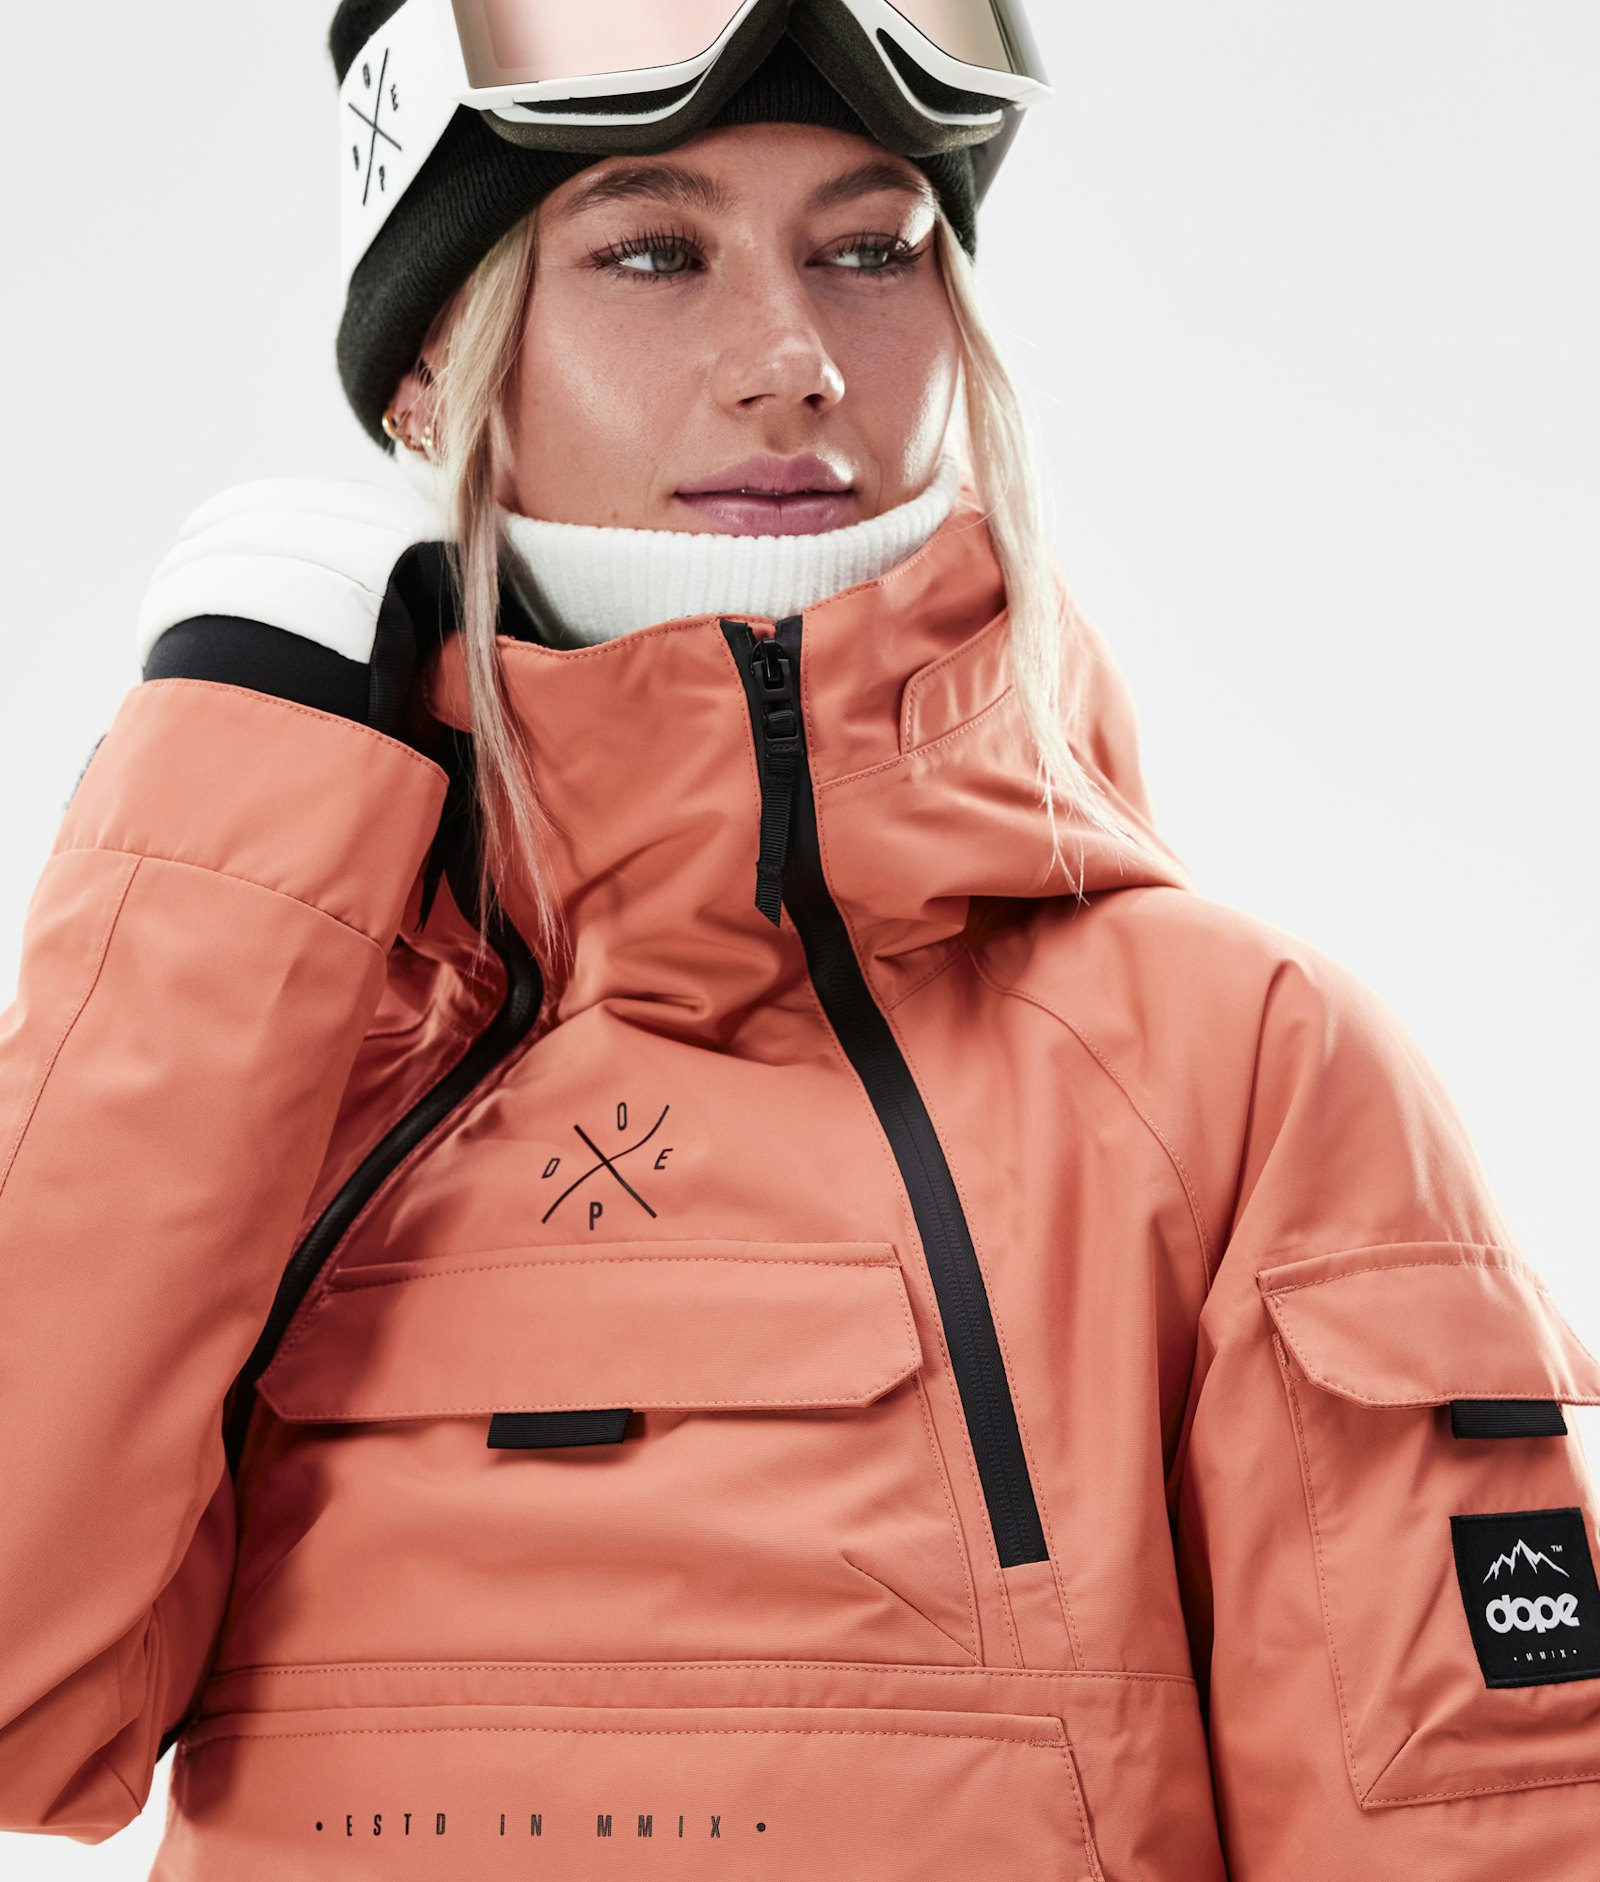 Akin W 2021 Veste Snowboard Femme Peach